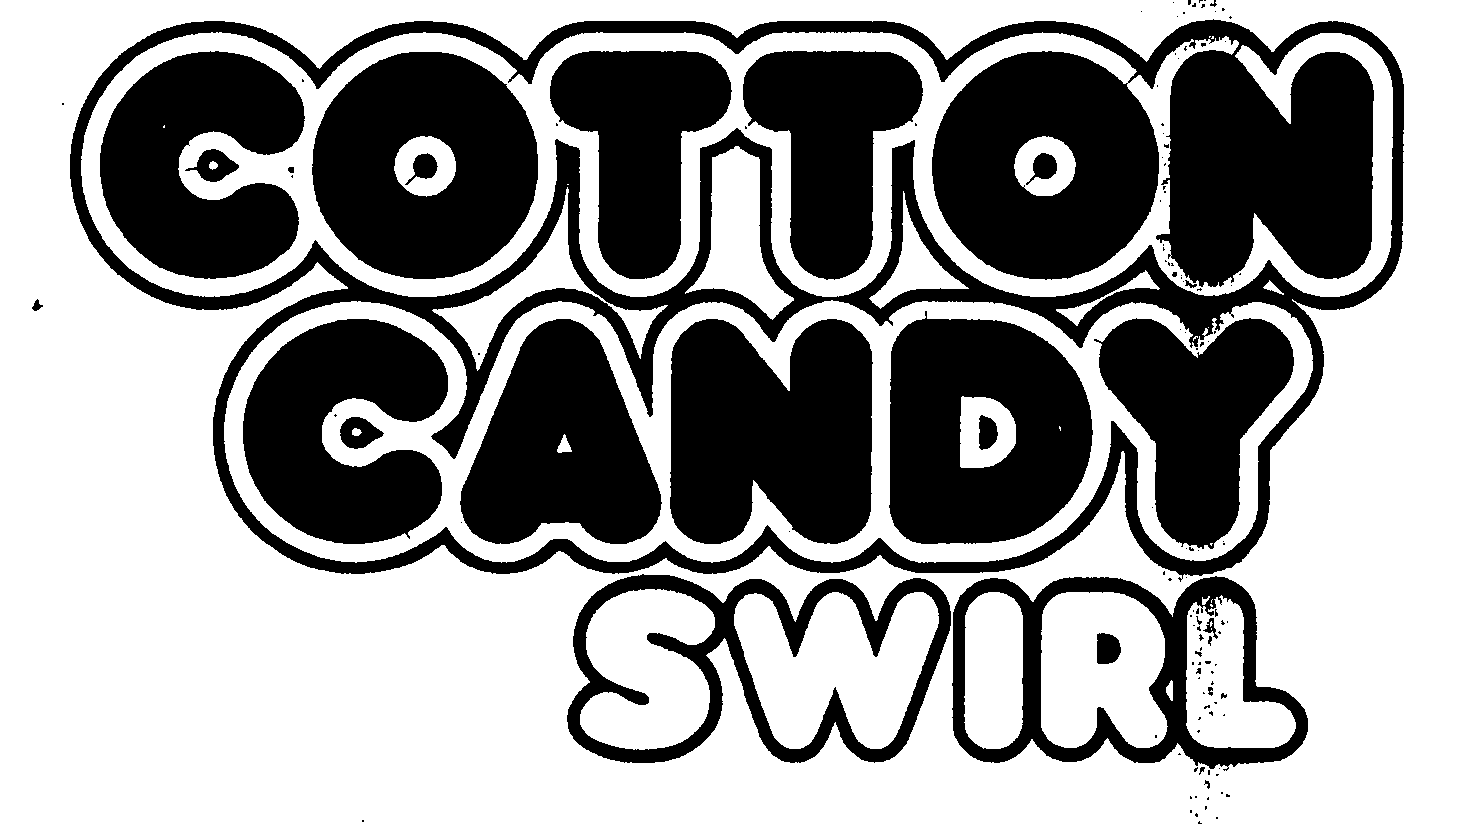  COTTON CANDY SWIRL